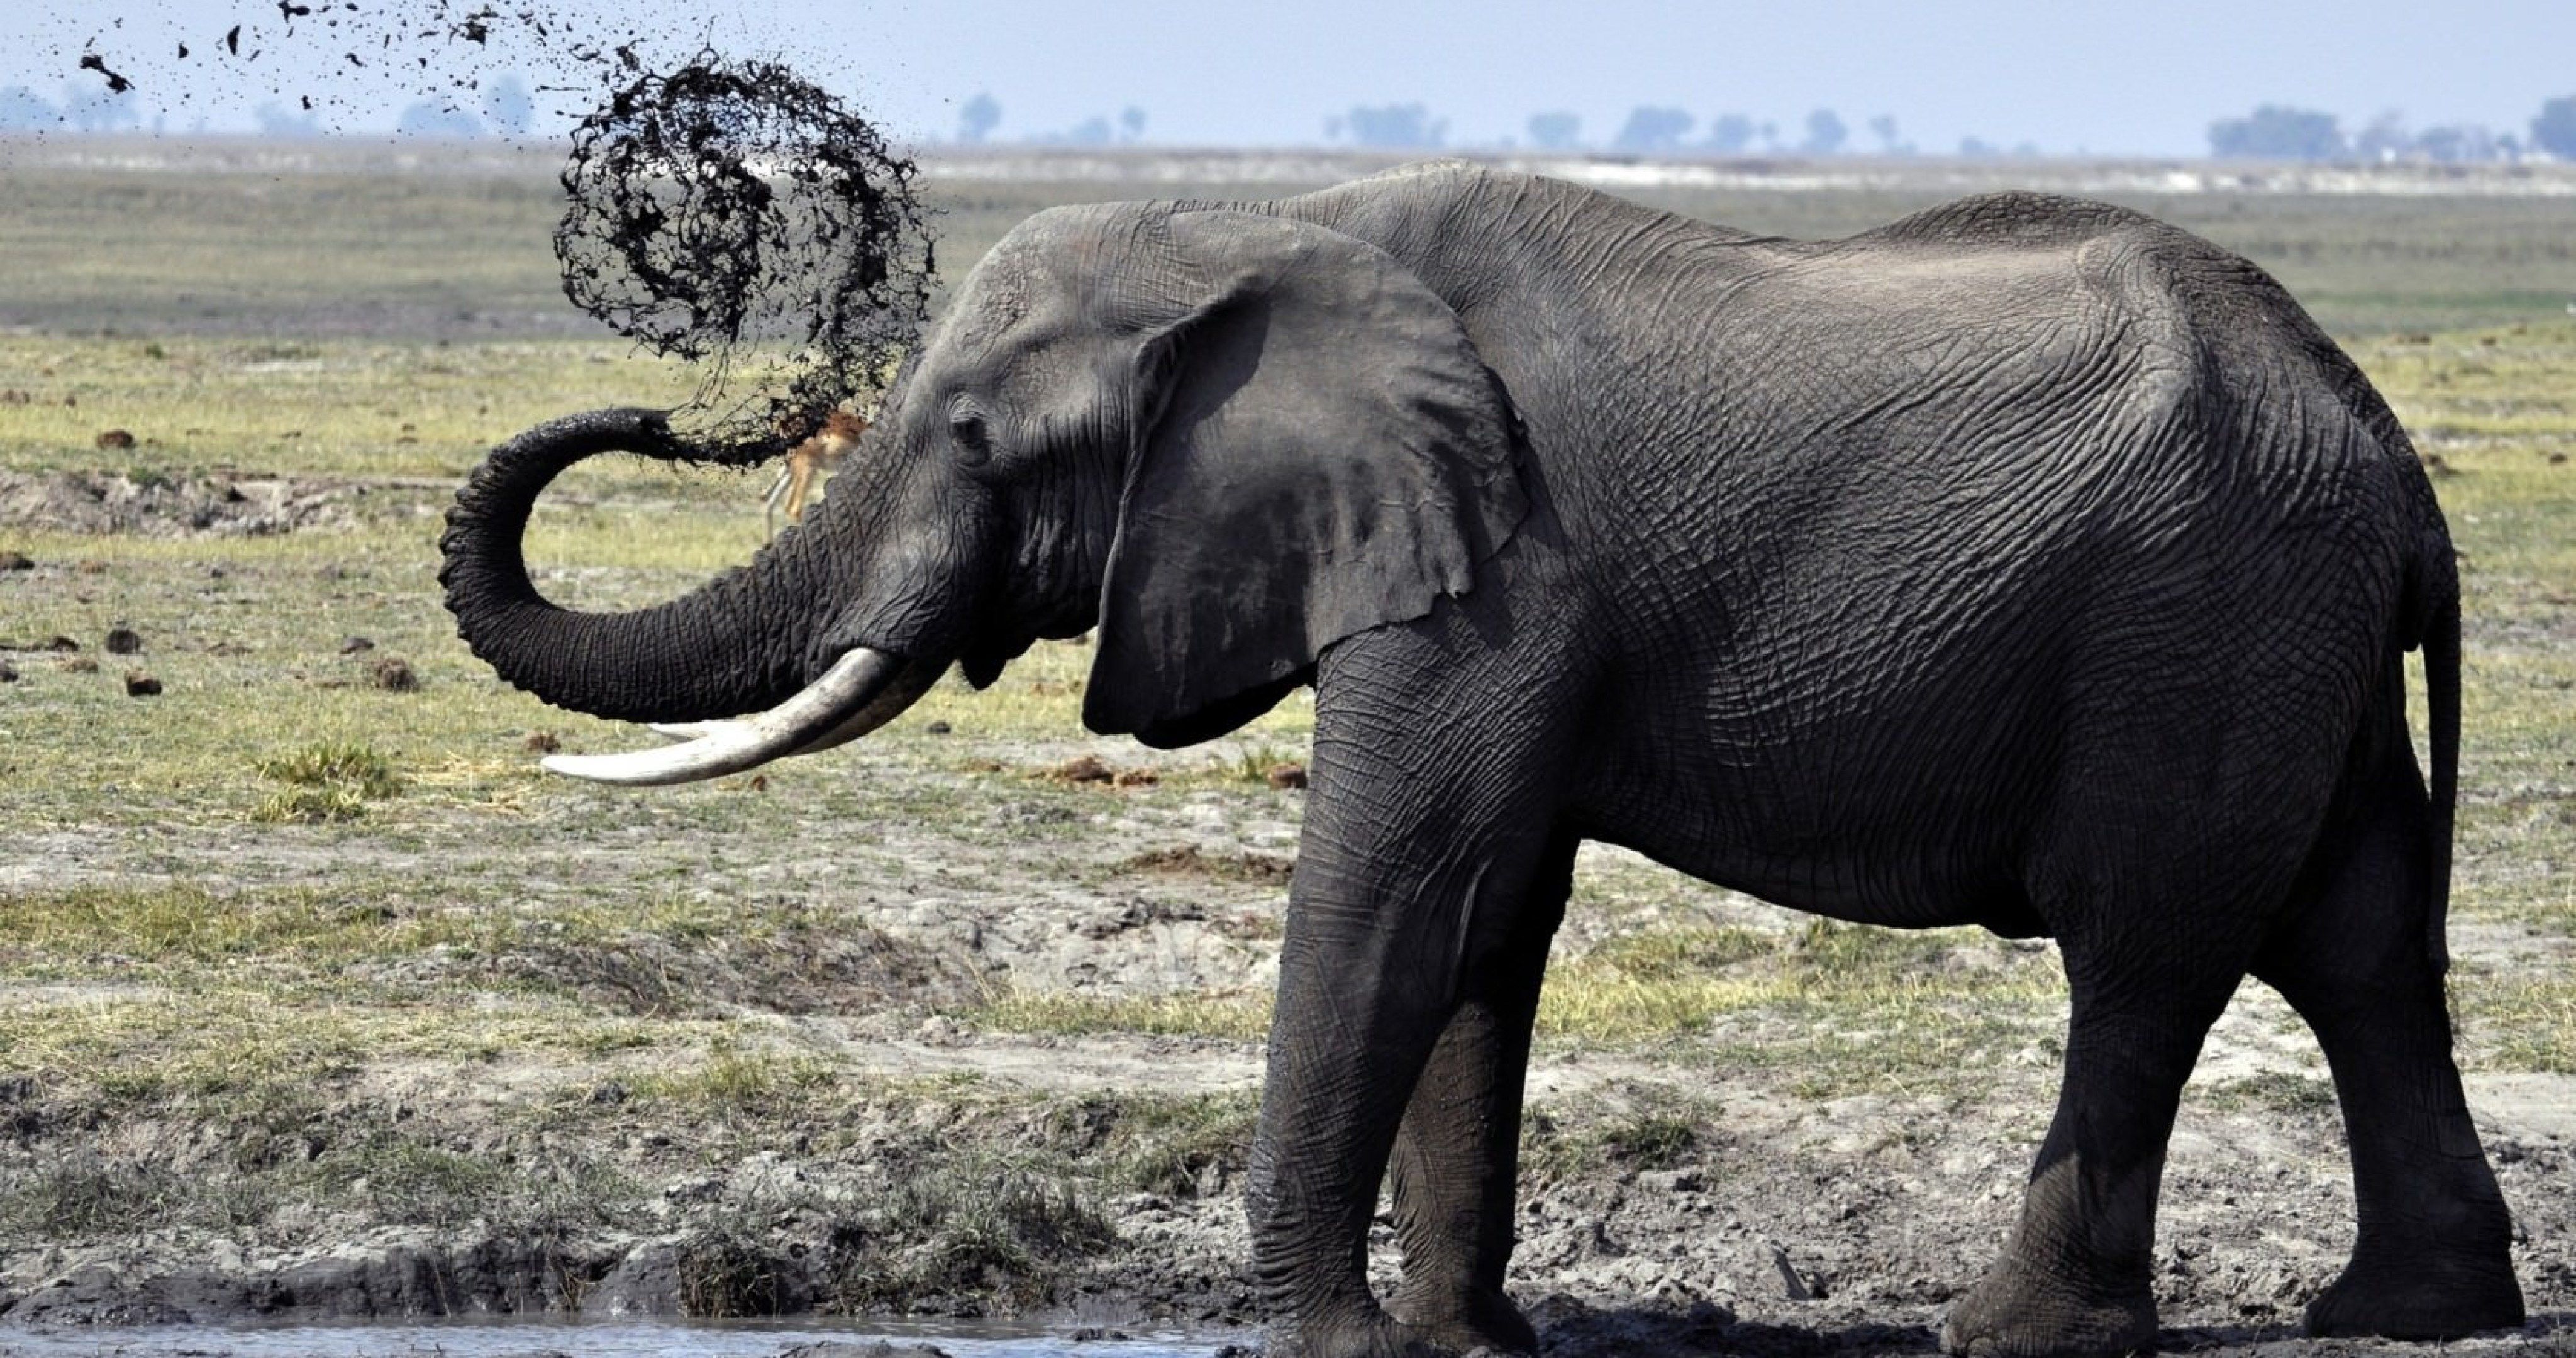 elephant mud puddle 4k ultra HD wallpaper. Elephant image, Elephants photo, Elephant